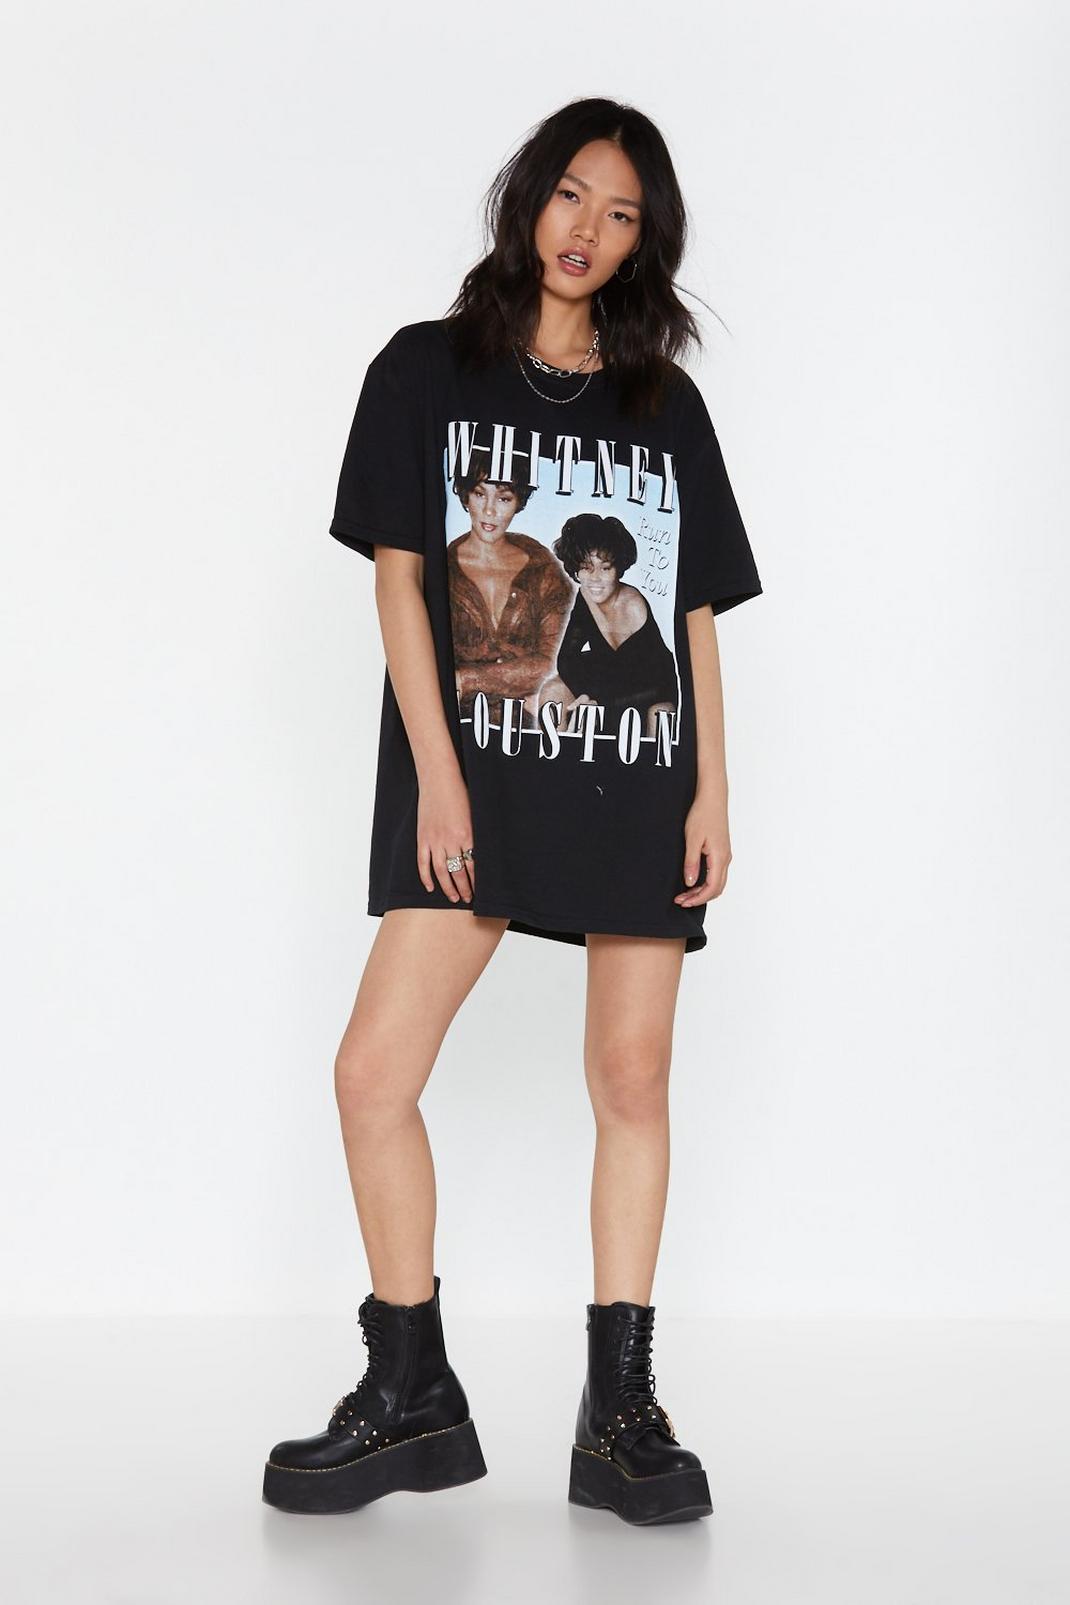 Robe t-shirt Whitney Houston Je Suis Toutes les Femmes image number 1